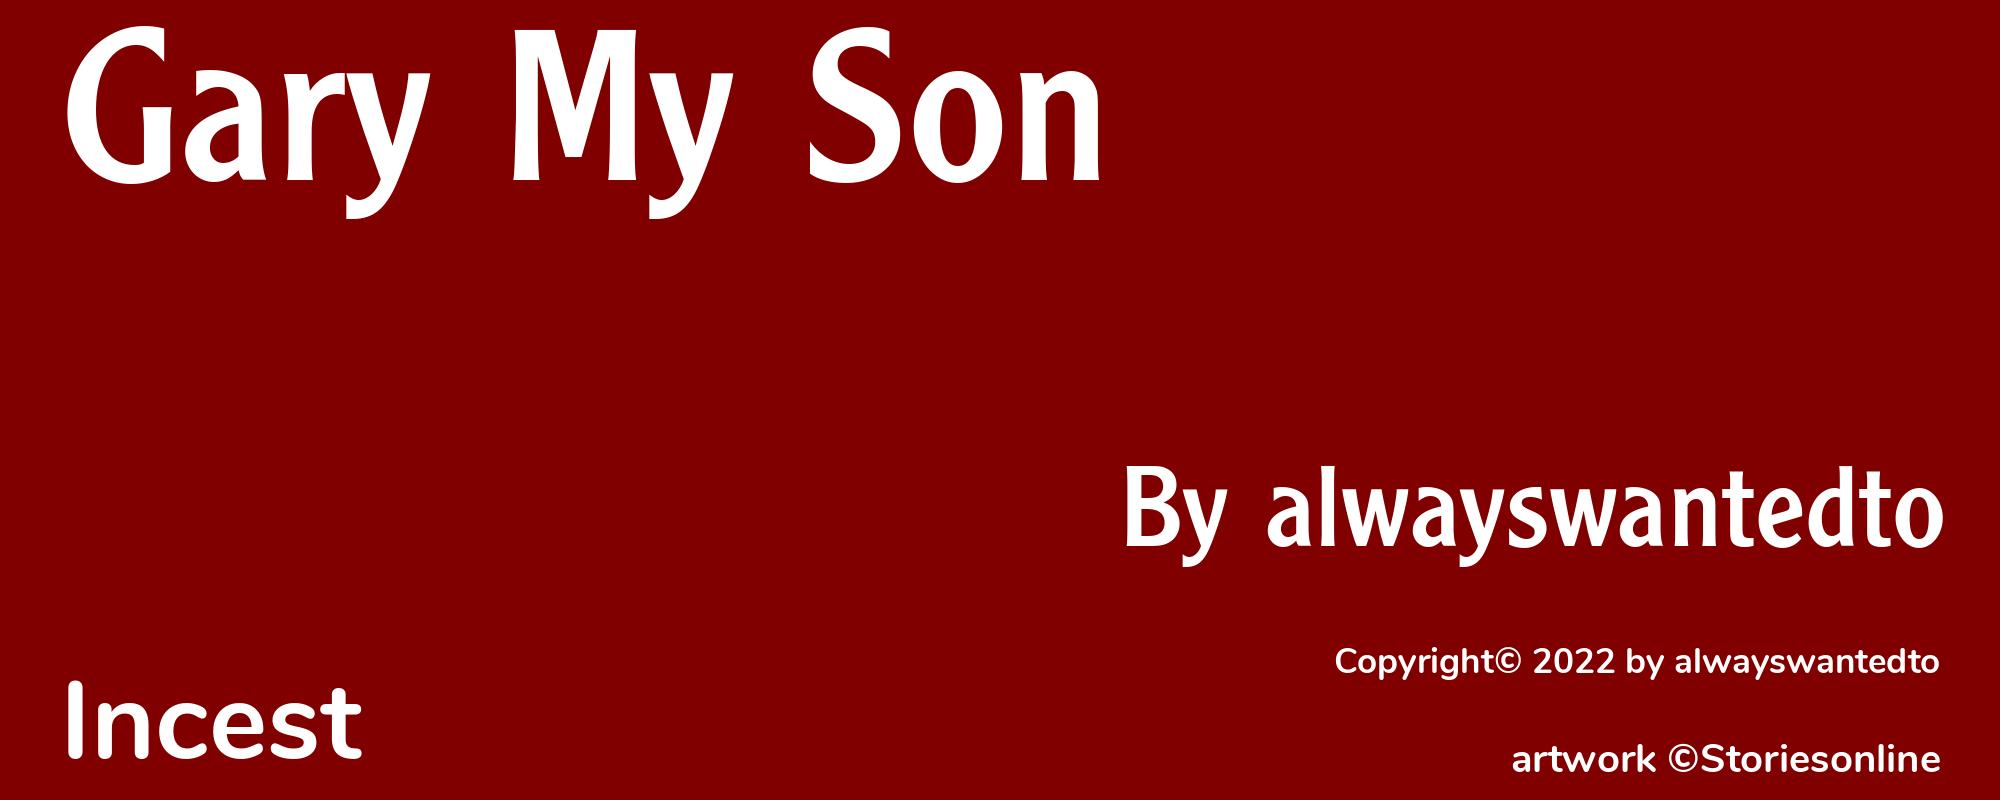 Gary My Son - Cover